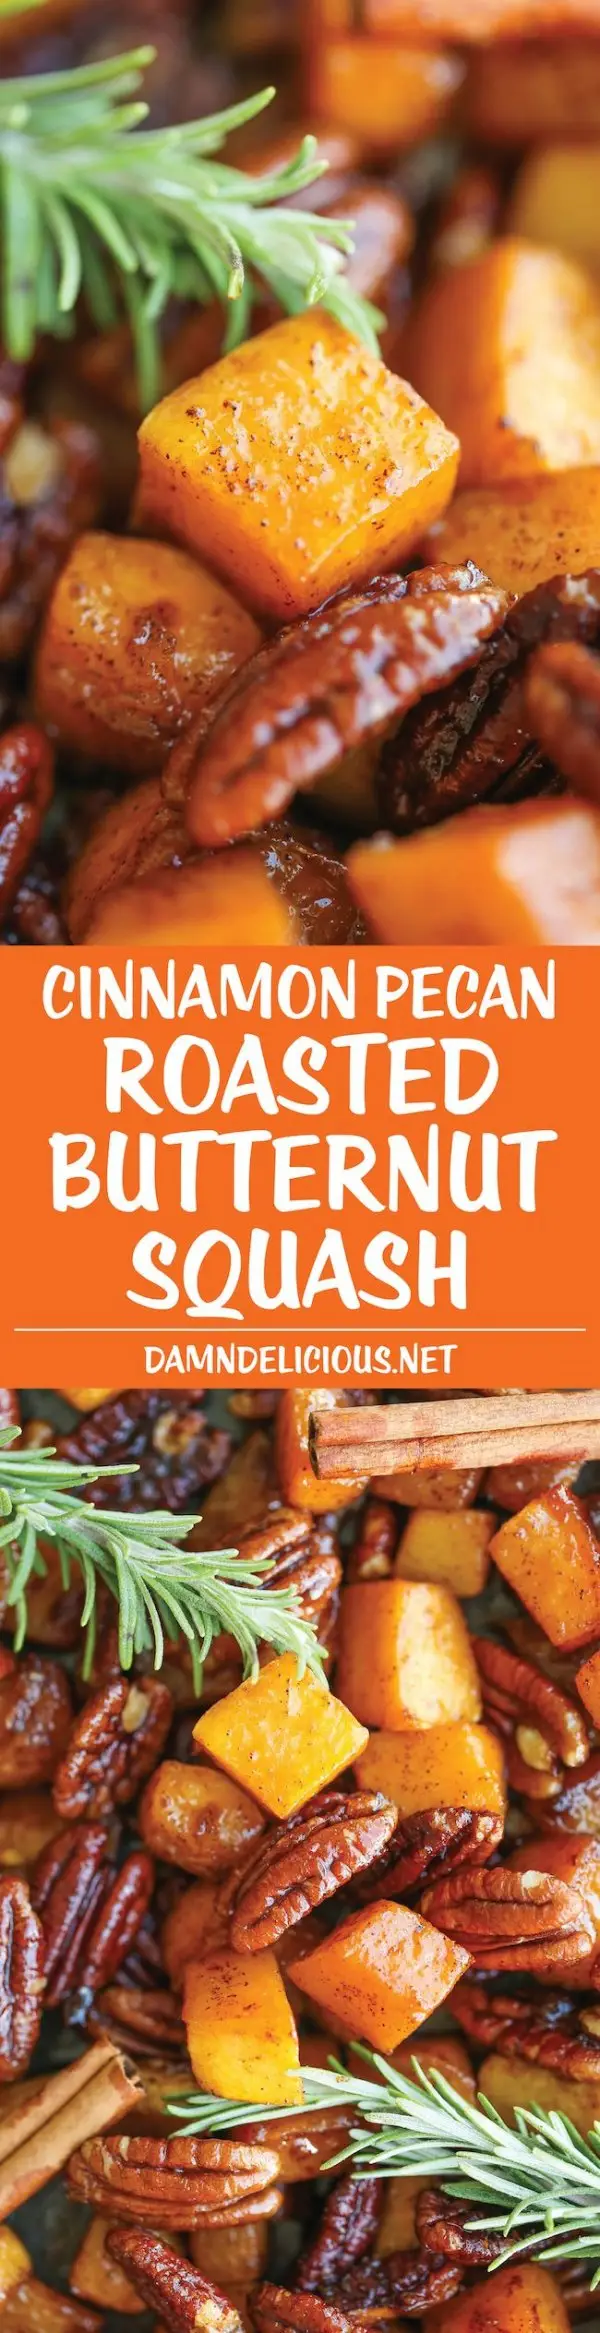 Cinnamon Pecan Roasted Butternut Squash